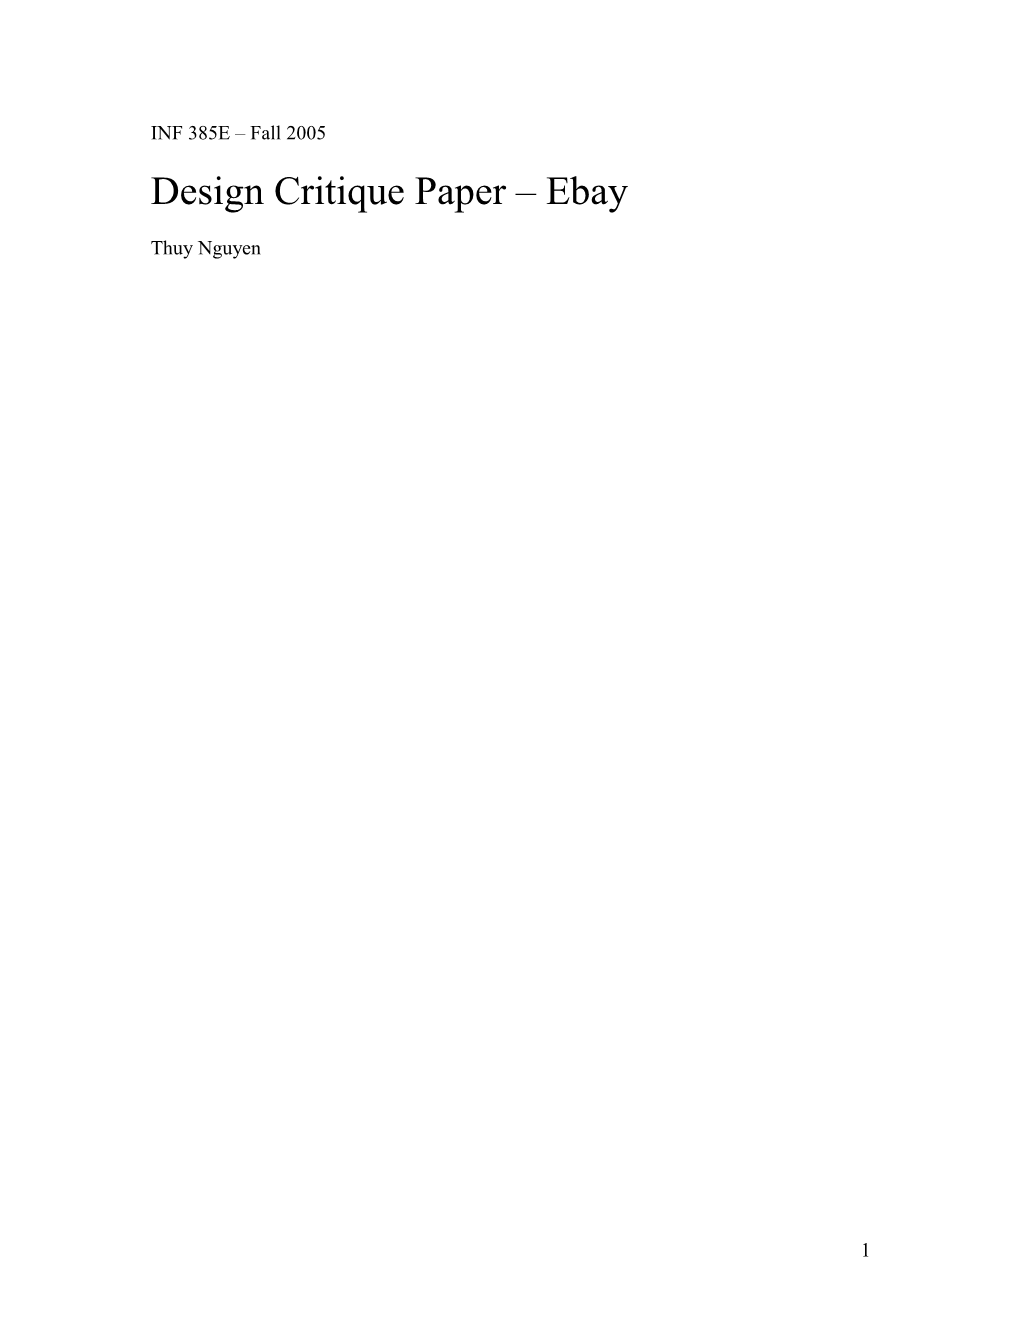 Design Critique Paper Ebay